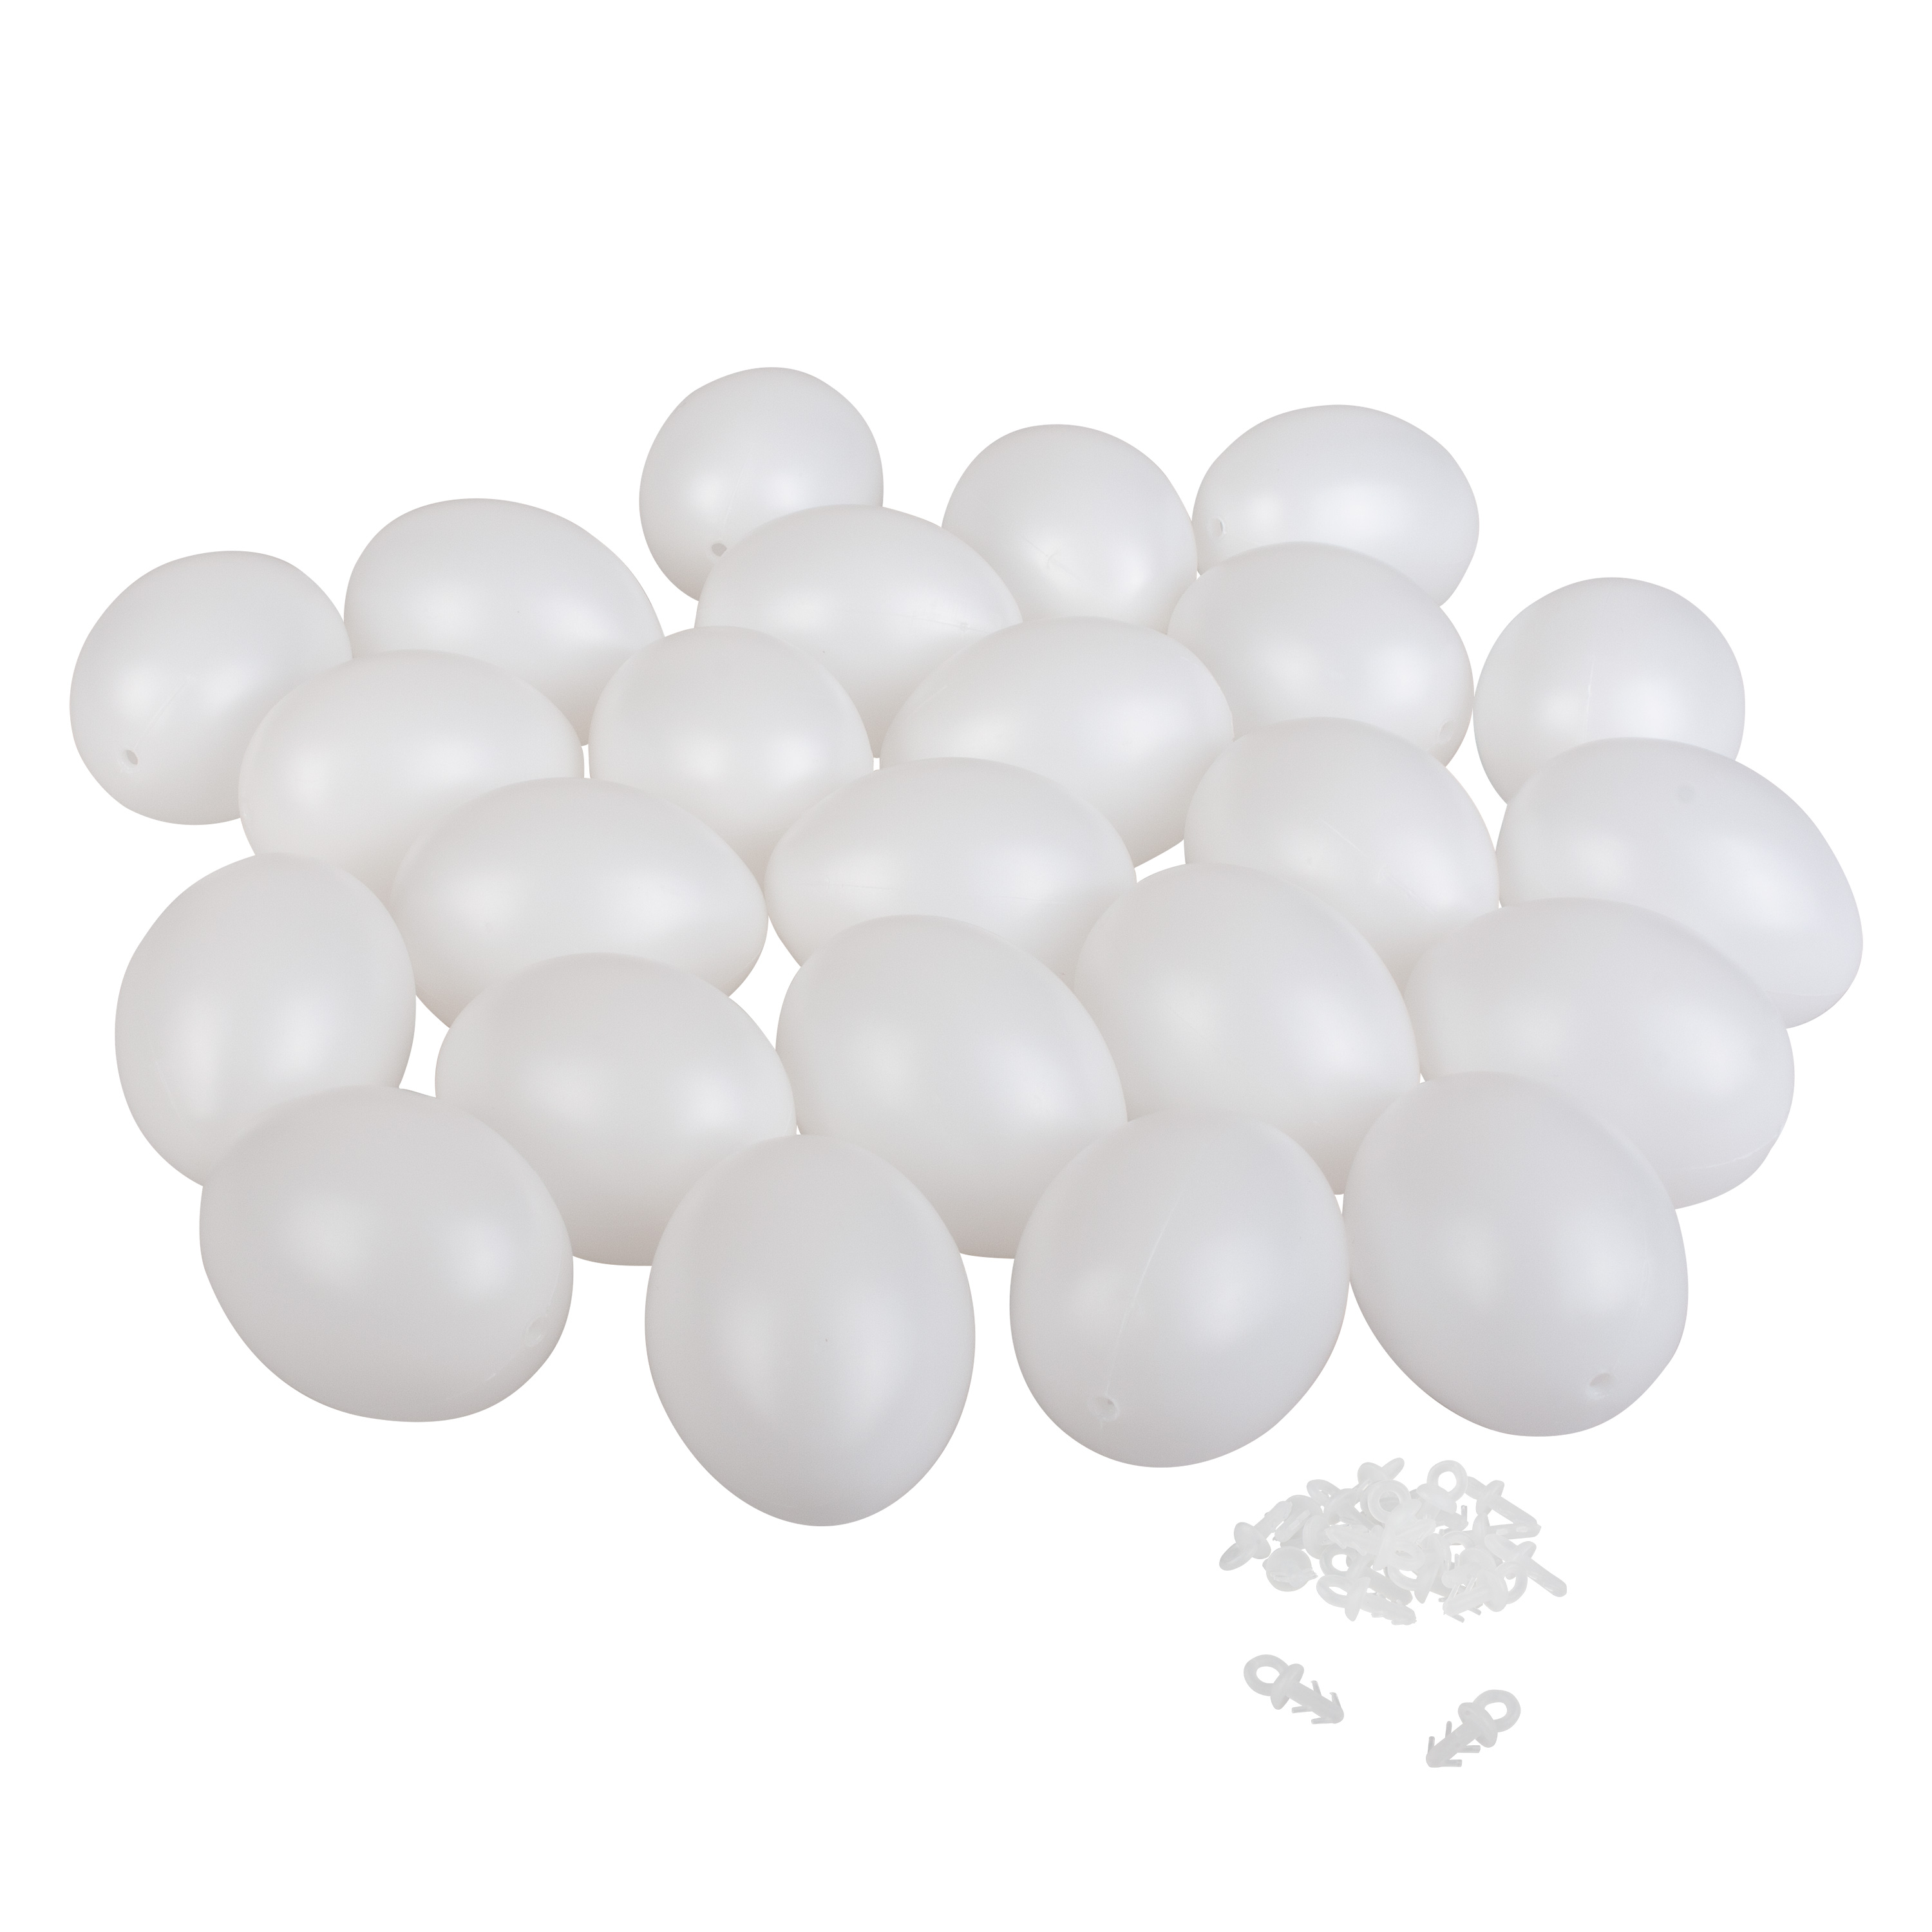 KuKiMa Kunststoff-Eier mit Aufhänger, 24 Stück, Ø 60 mm